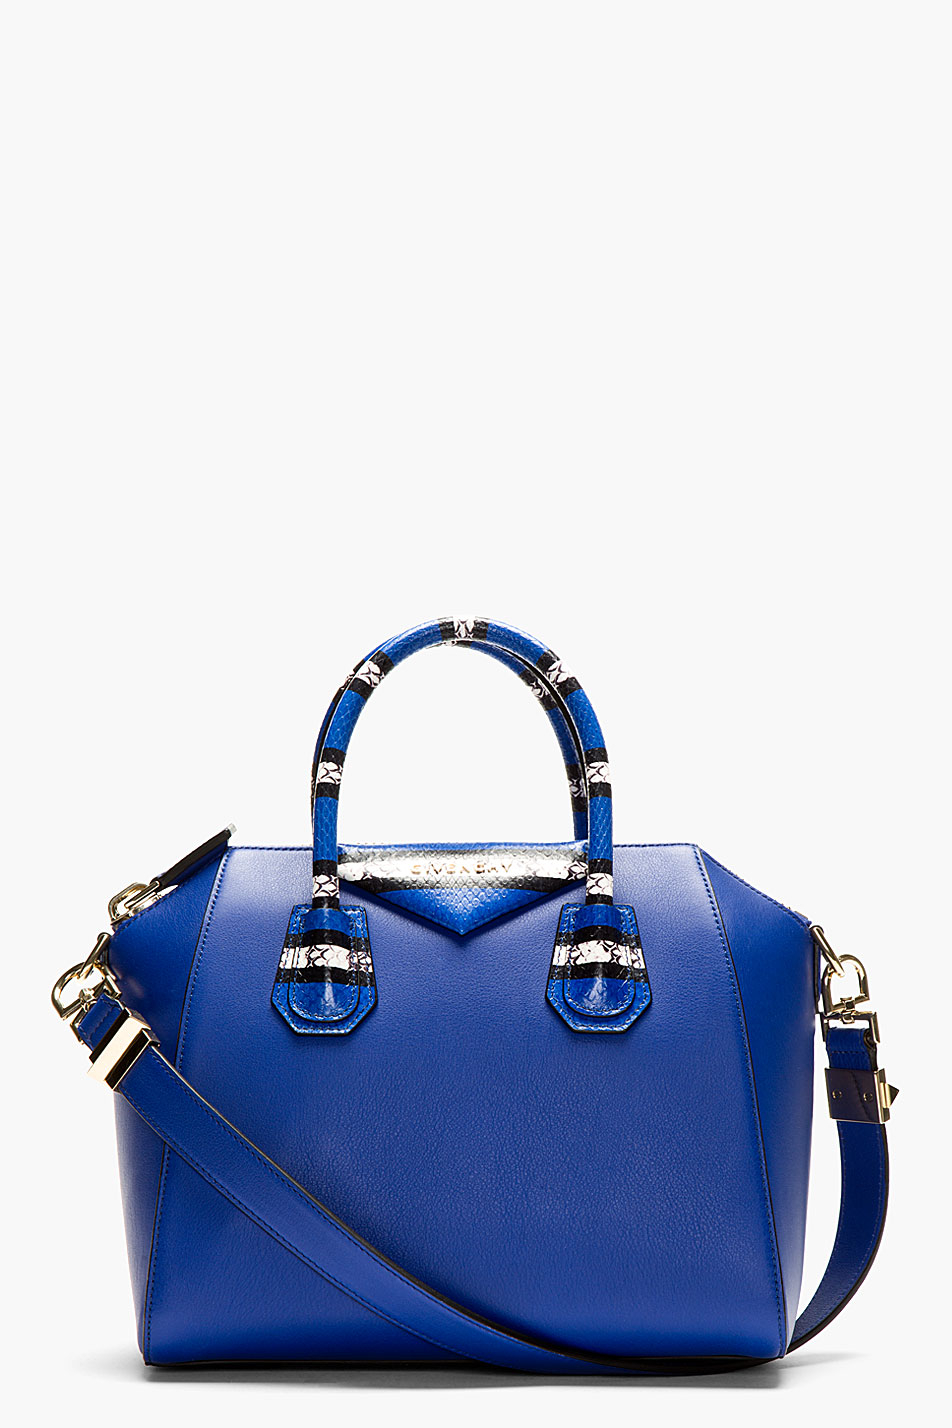 Givenchy Blue Leather Antigona Small Duffle Bag in Blue | Lyst